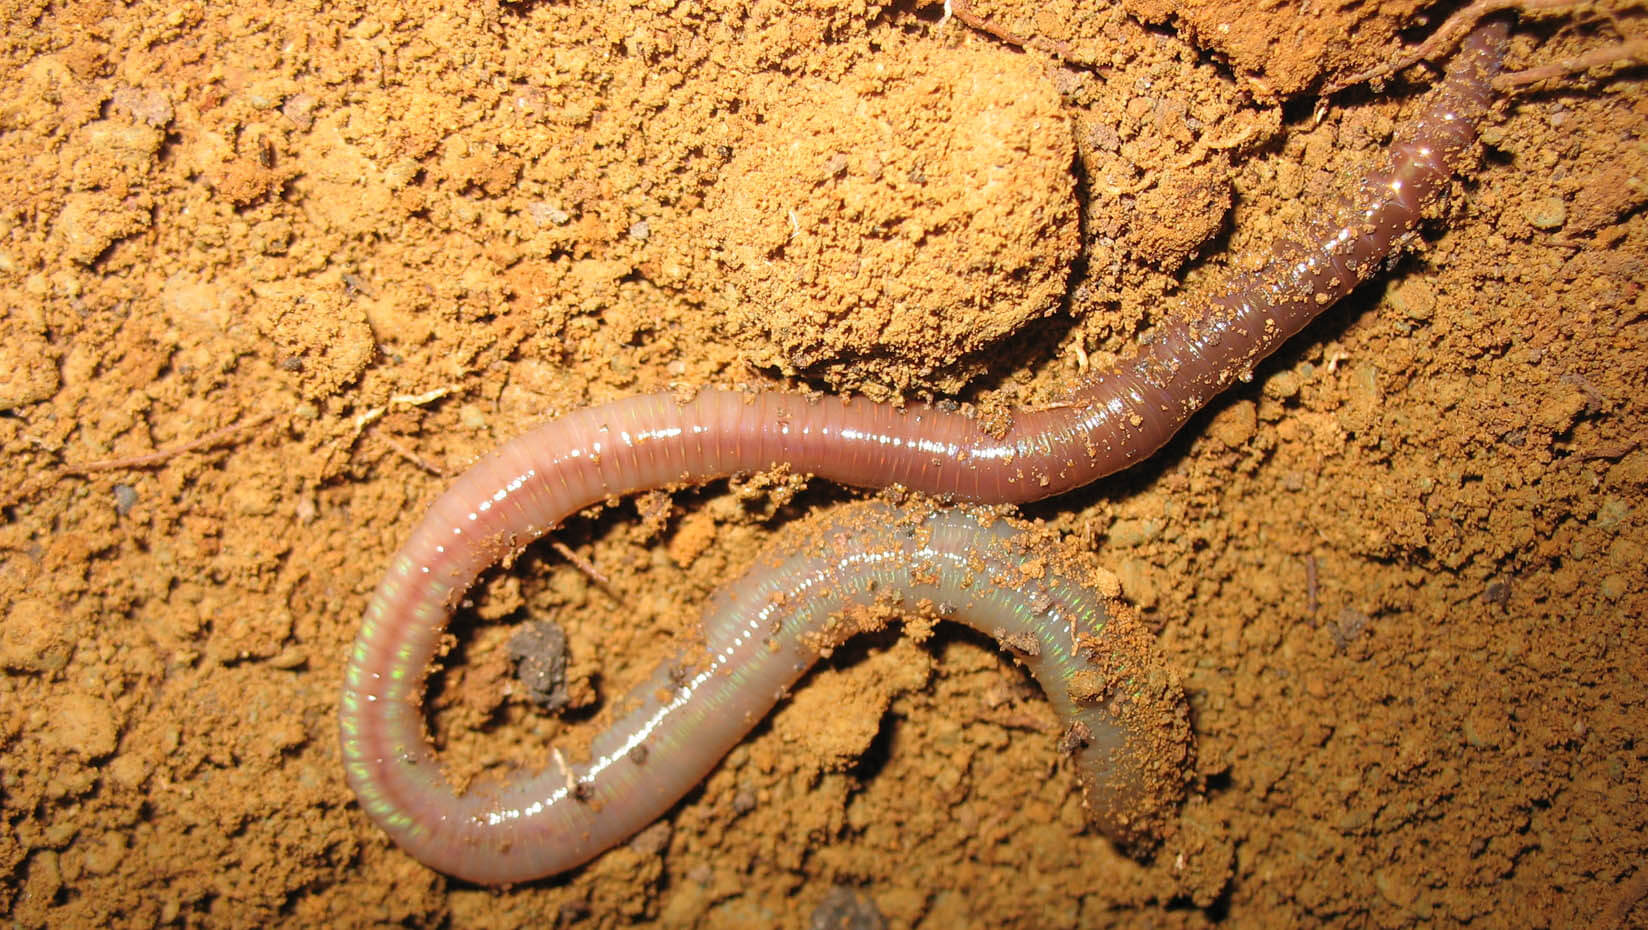 An invasive earthworm on soil